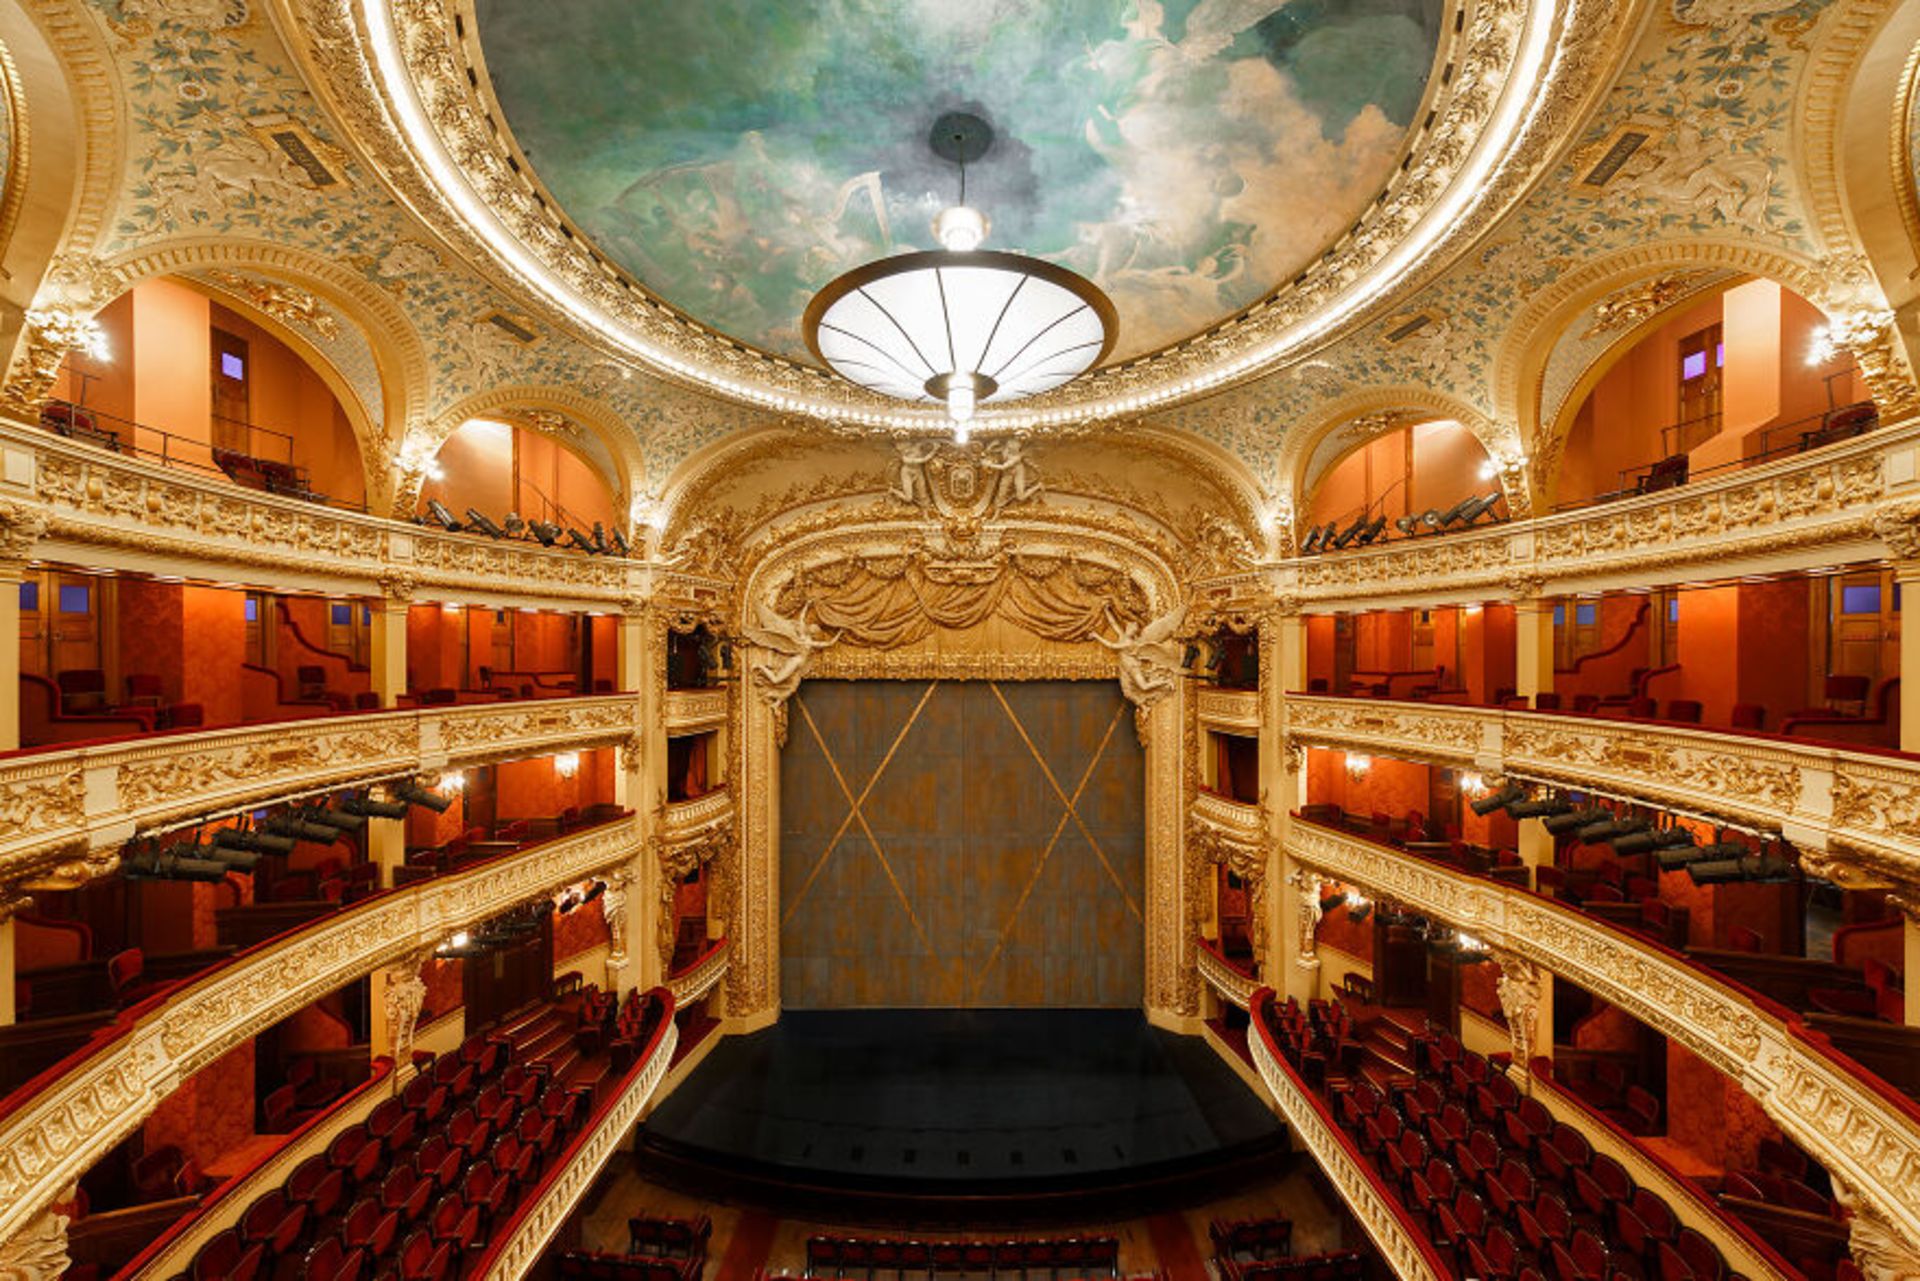 تئاتر ملی اپرای کمیک - Théâtre National De L'opéra Comique